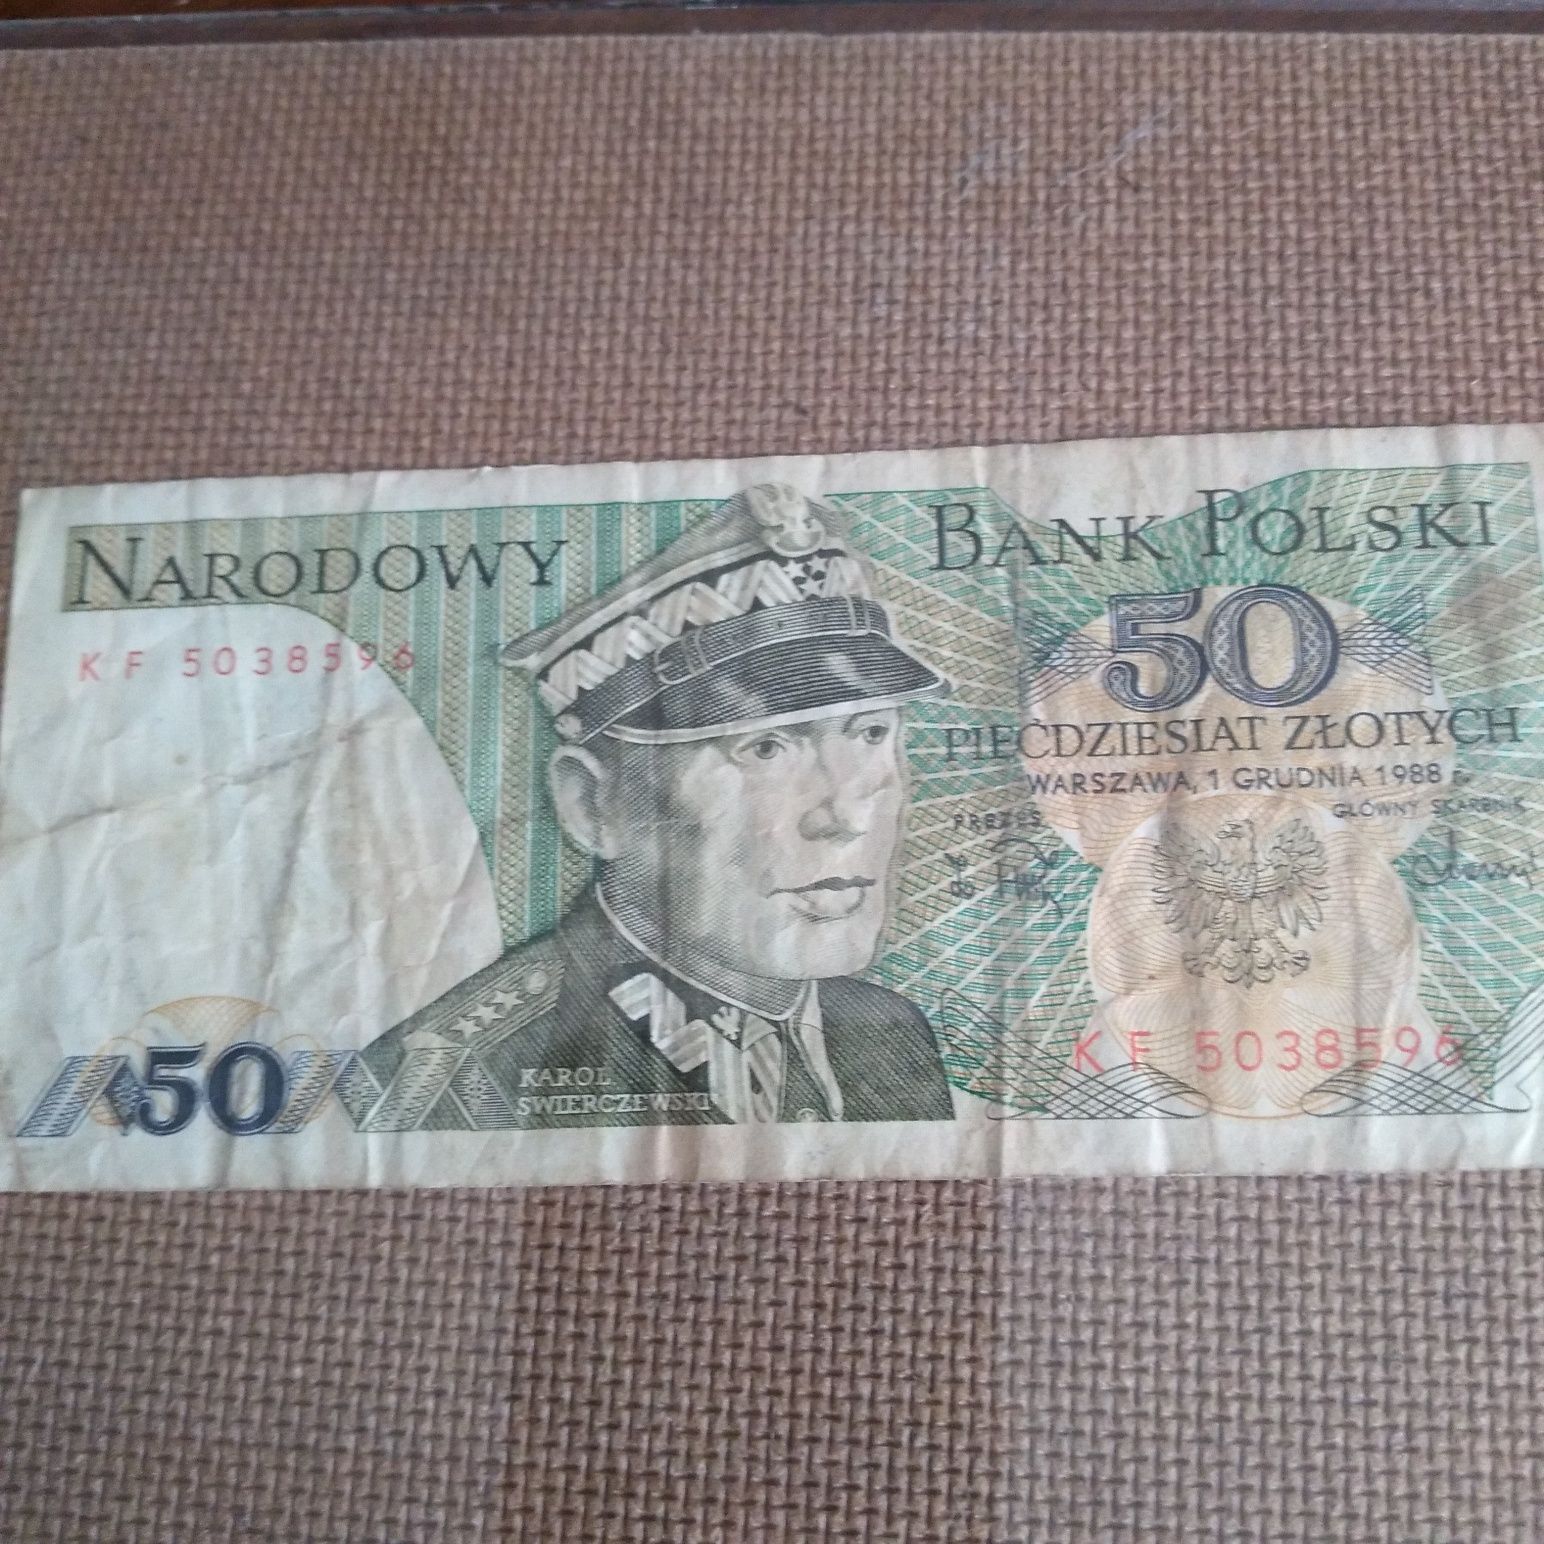 Banknot 50zl  1988r KF